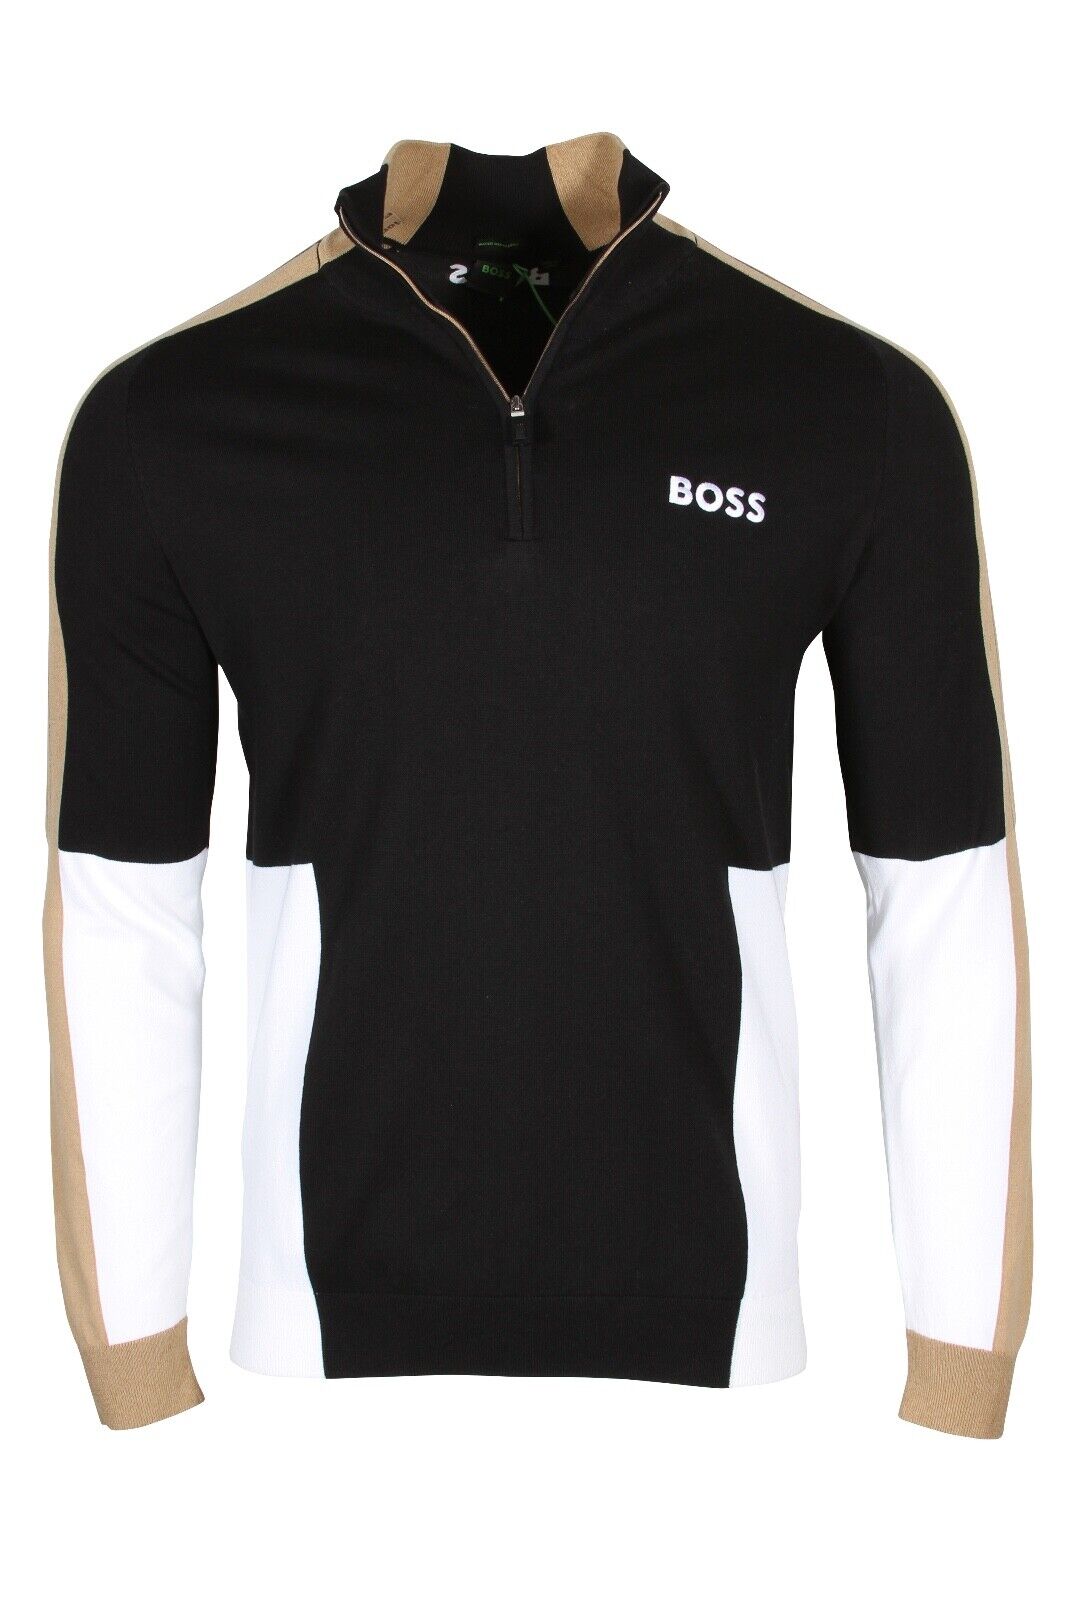 HUGO BOSS Zolkar Men’s Cotton-Blend Zip-Neck Sweater in Black 50493769-001